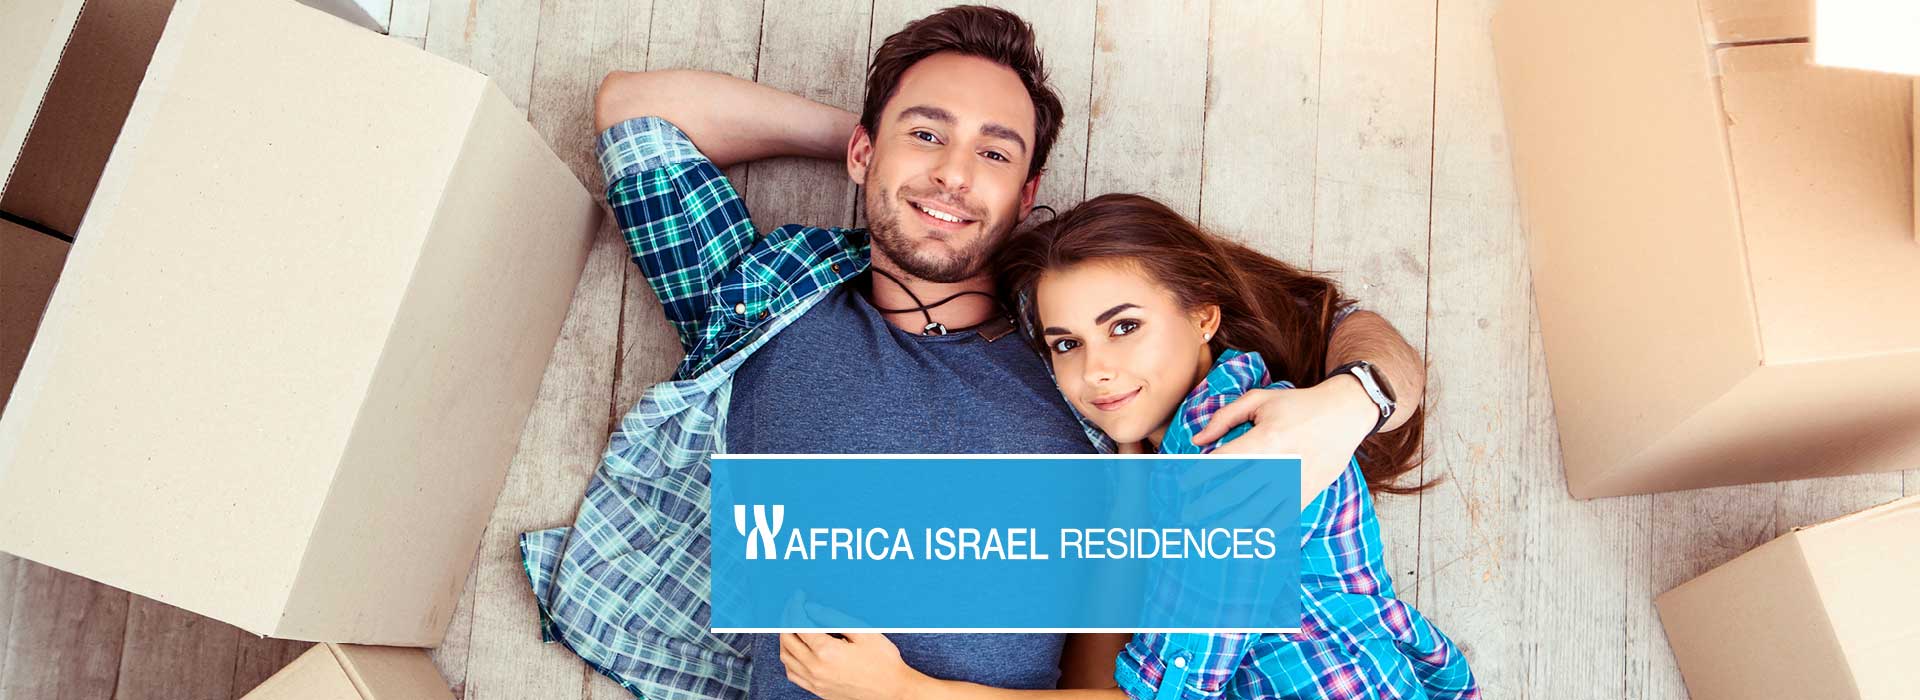  Africa Israel Residence